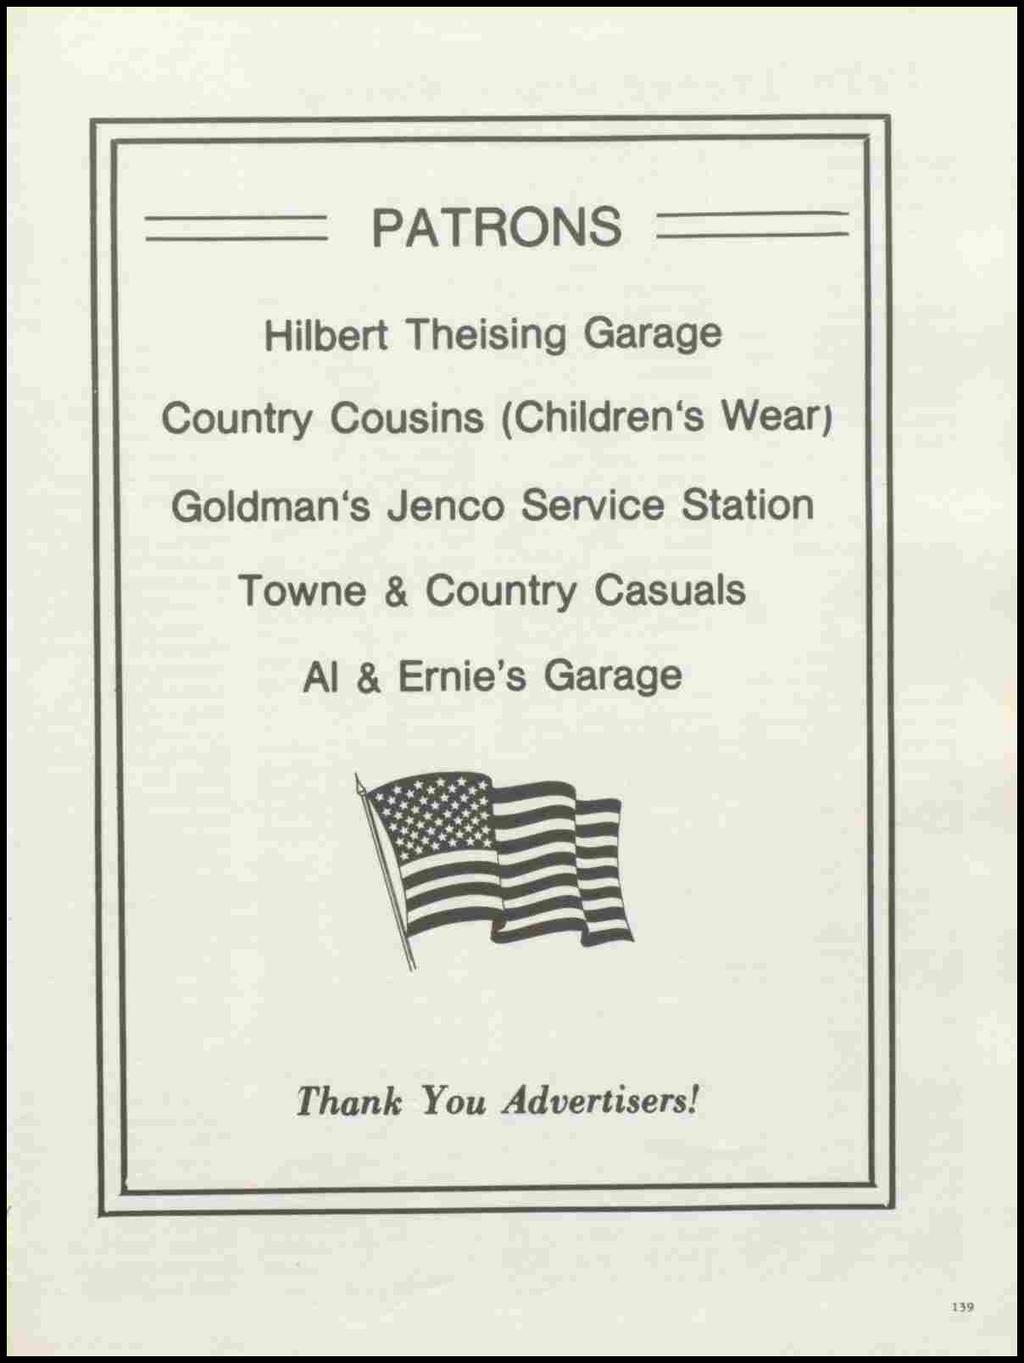 PATRONS Hilbert Theising Garage Country Cousins (Children's Wear) Goldman's Jenco